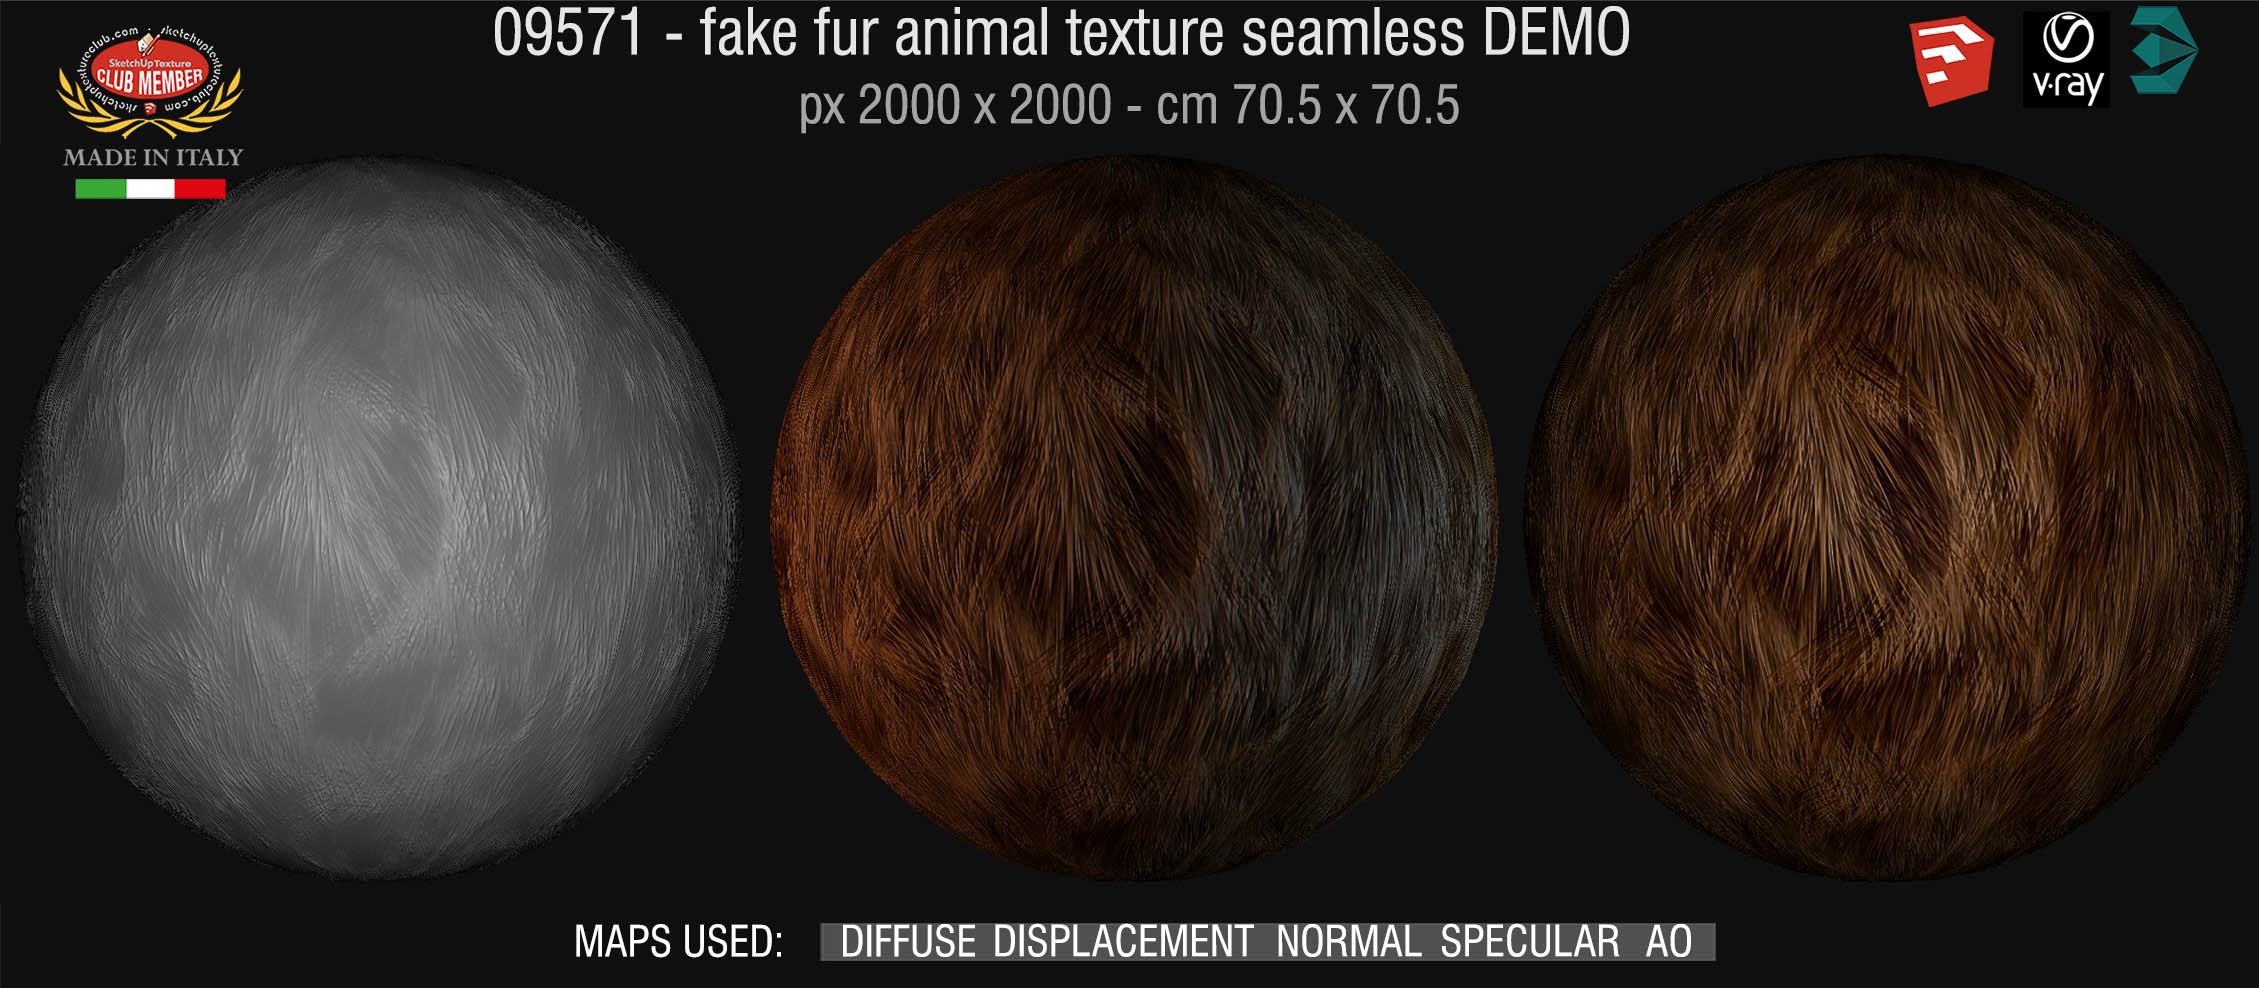 09571 HR fake fur animal texture seamless + maps DEMO